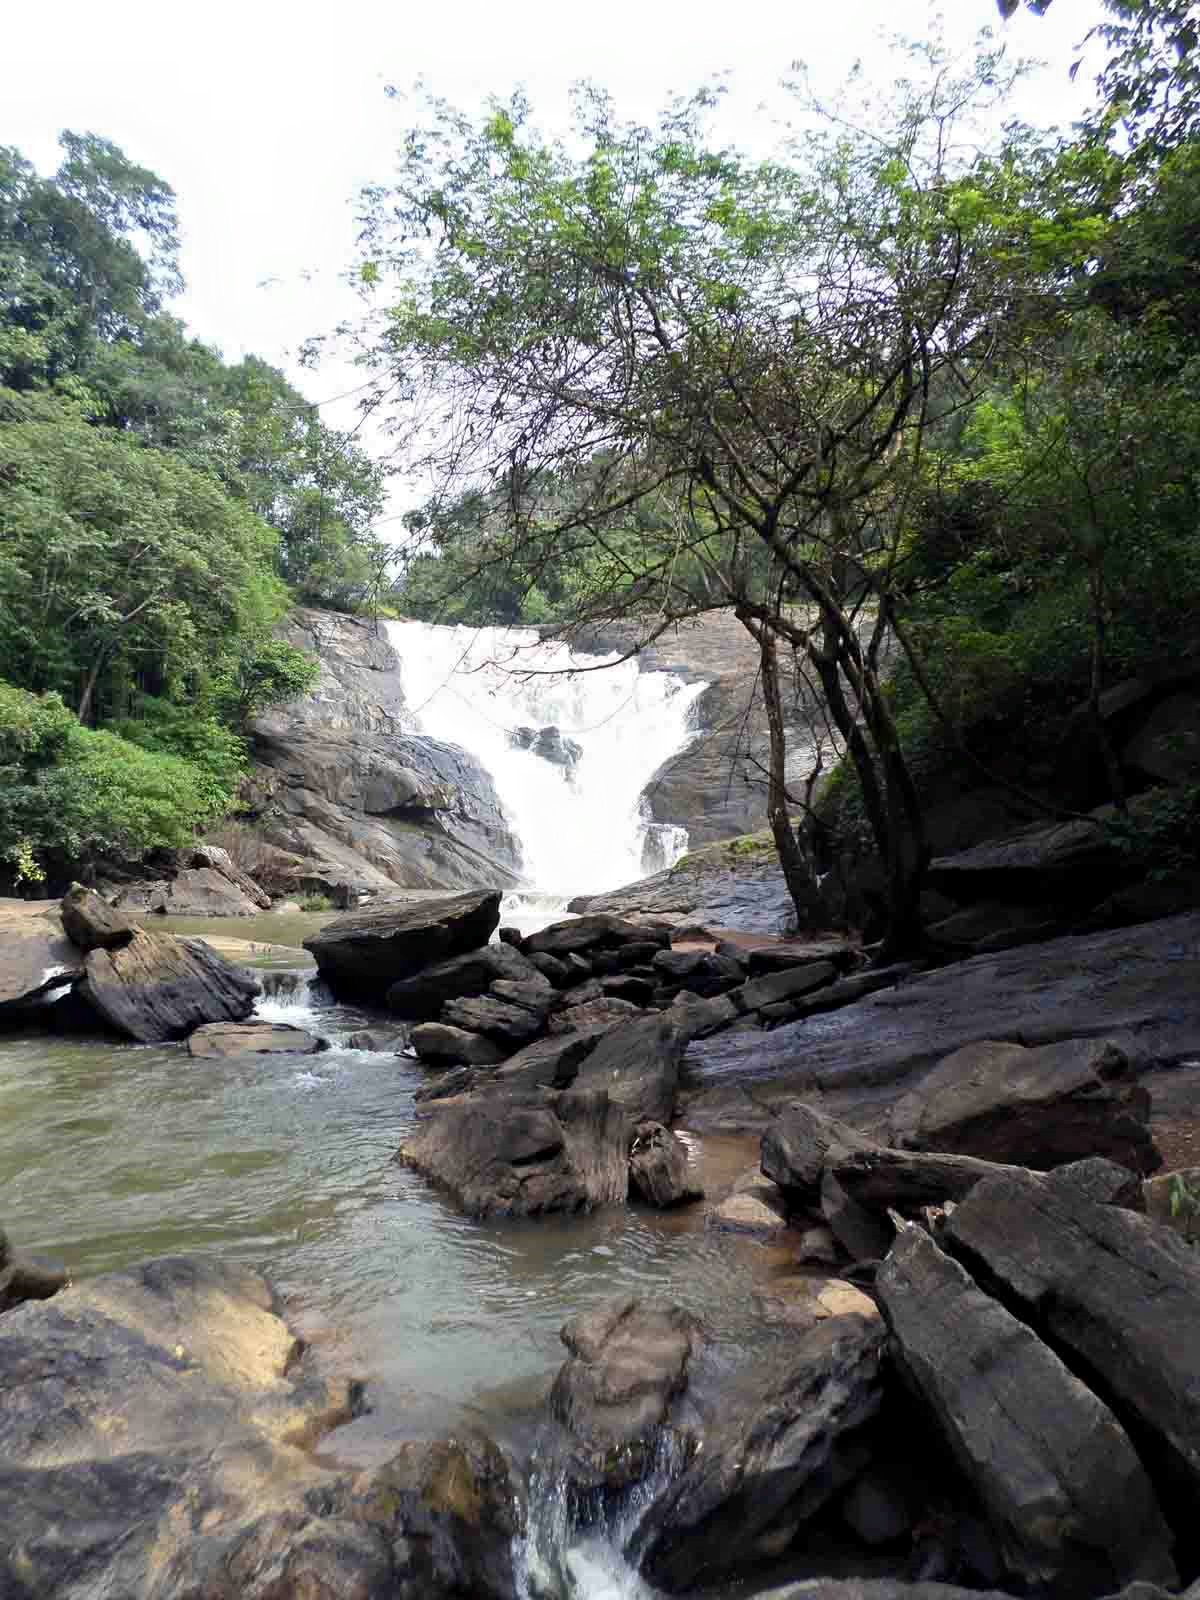 Kanthanpara Waterfalls Wayanad is a unique and interesting tourist destination